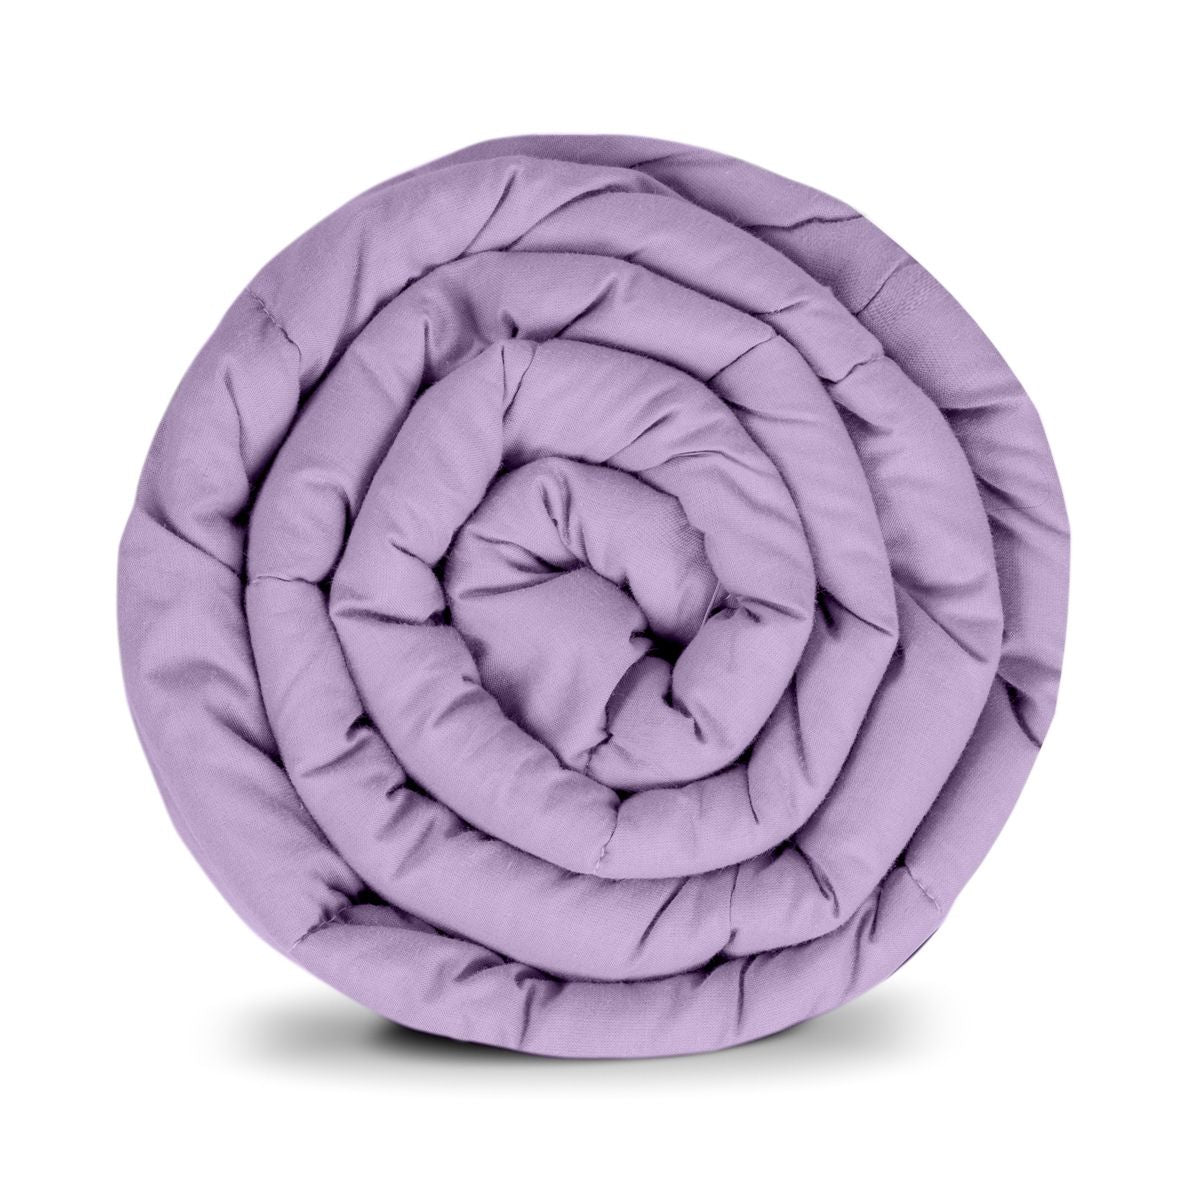 Premium Cotton Cover in Lavender